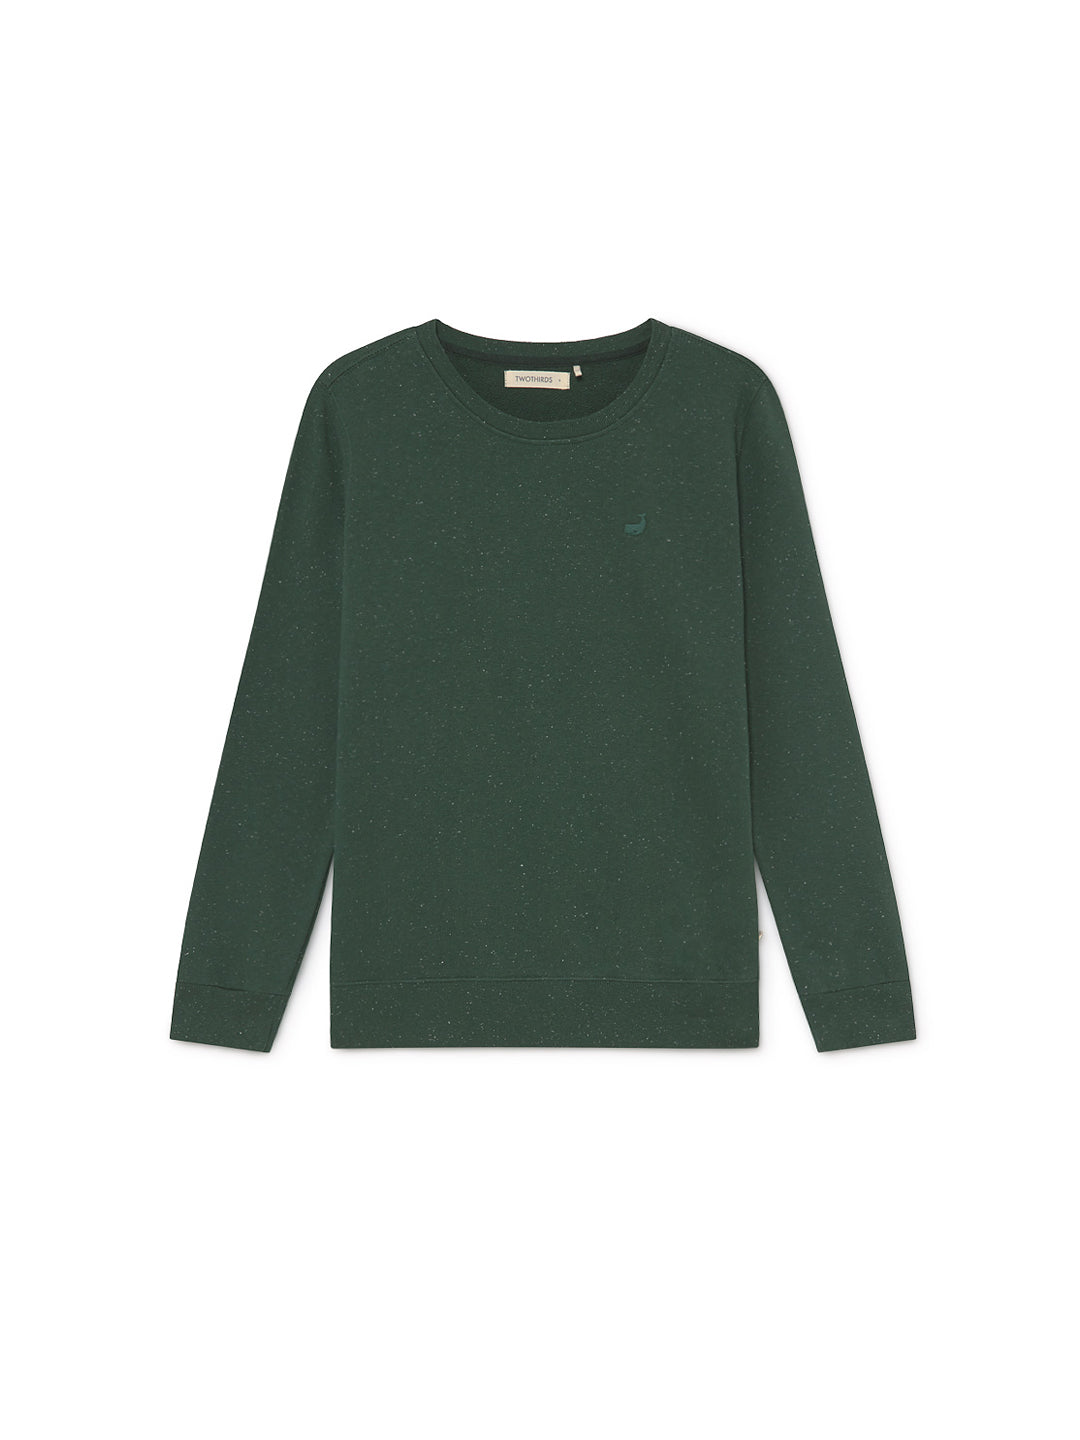 Sepanggar Sweatshirt - Dark Green